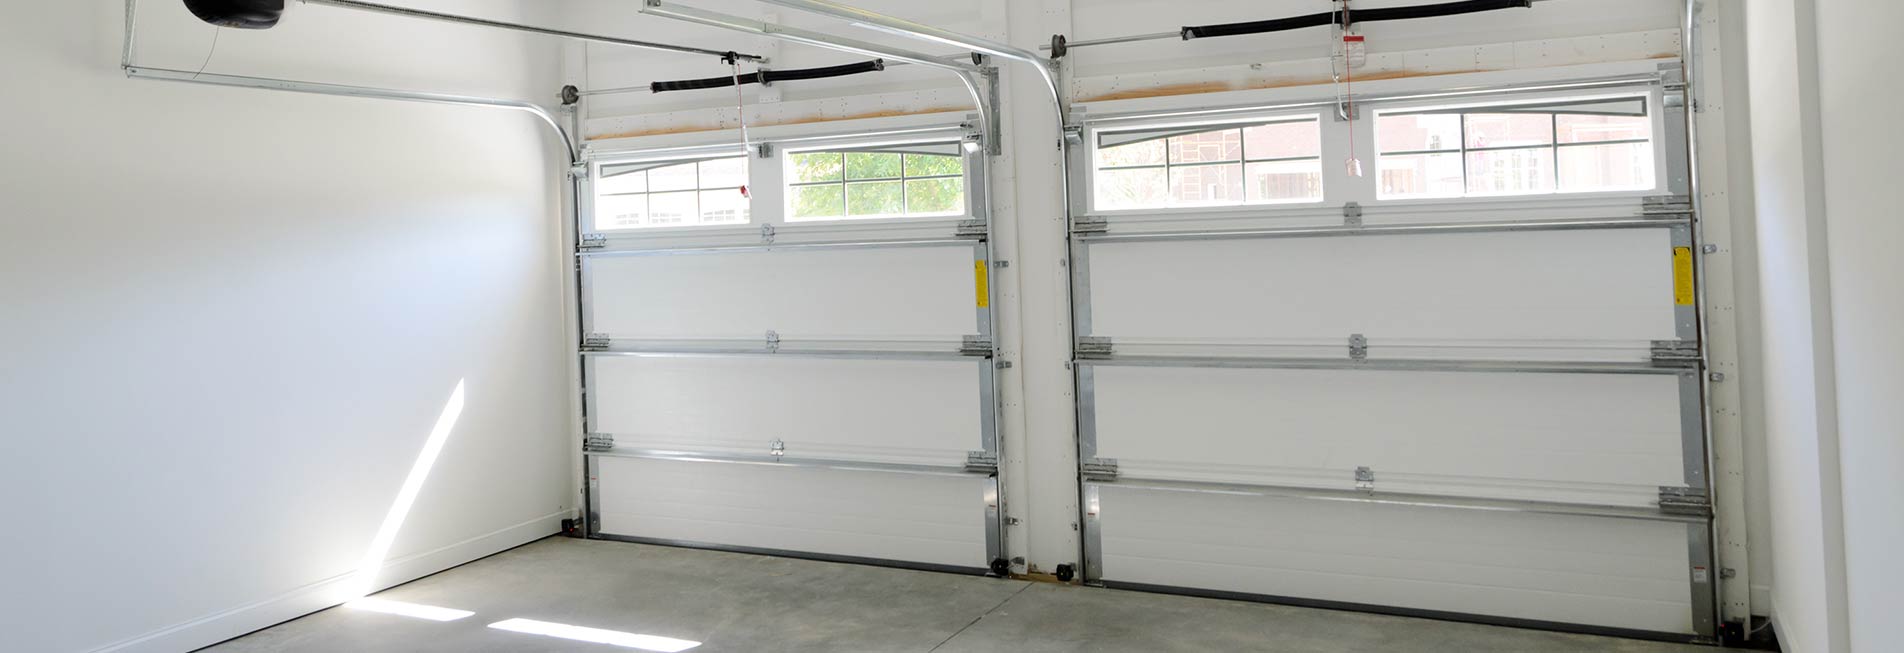 Modern Garage Door Company Jacksonville Fl for Simple Design